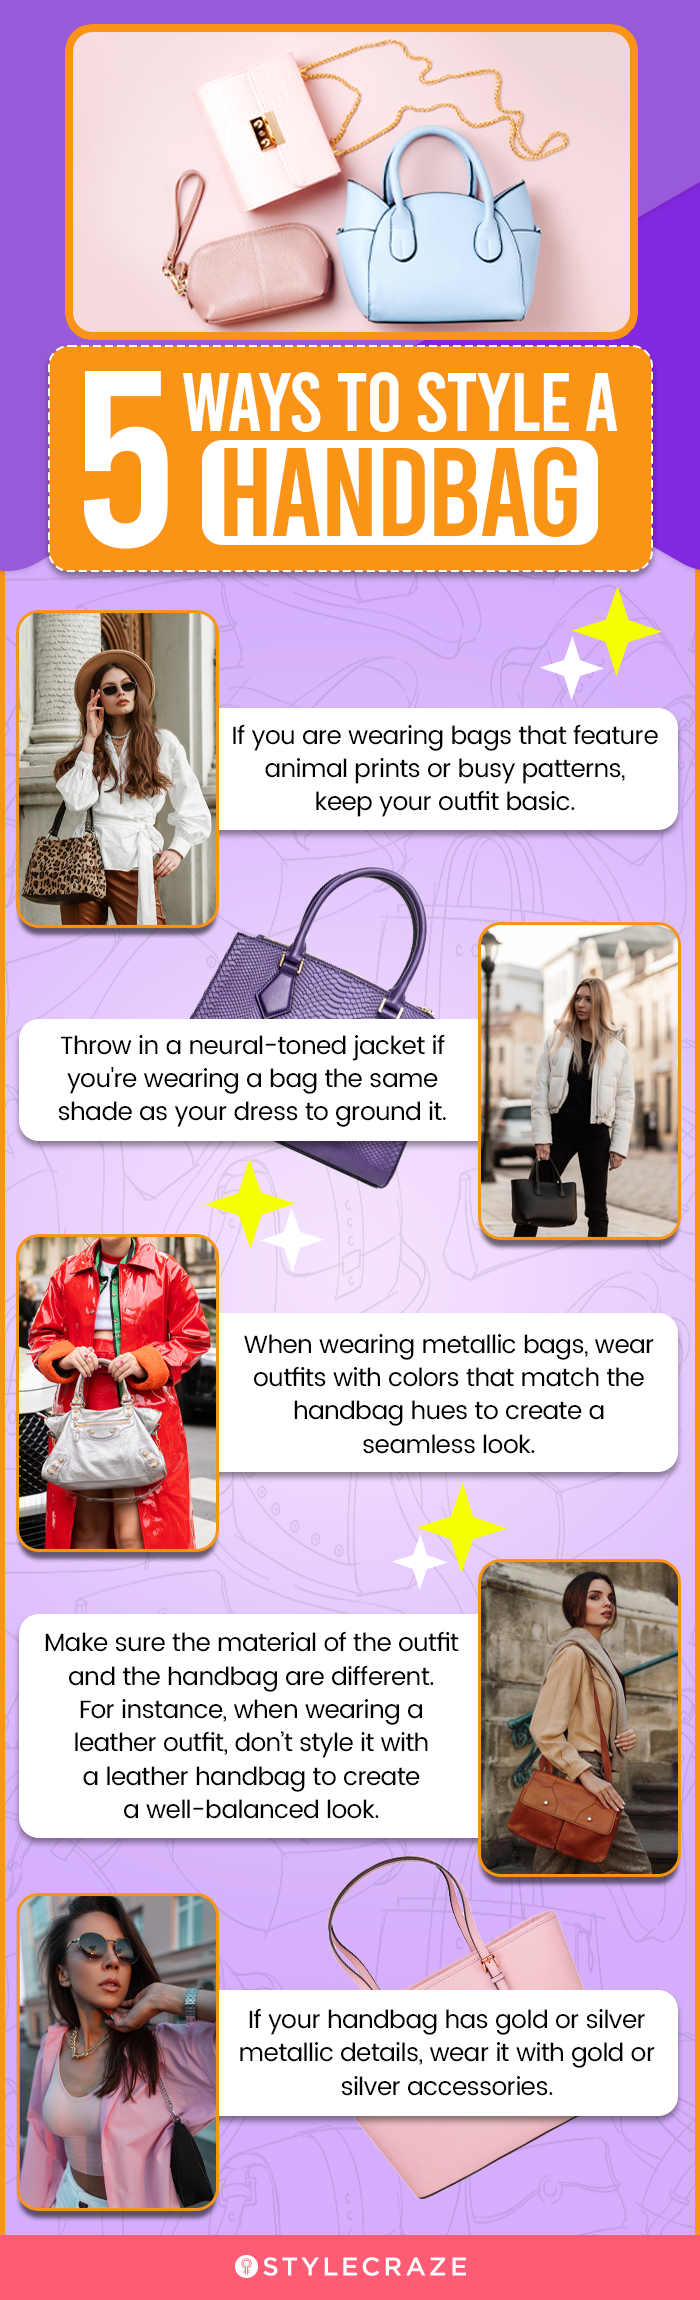 5 Ways To Style A Handbag (infographic)